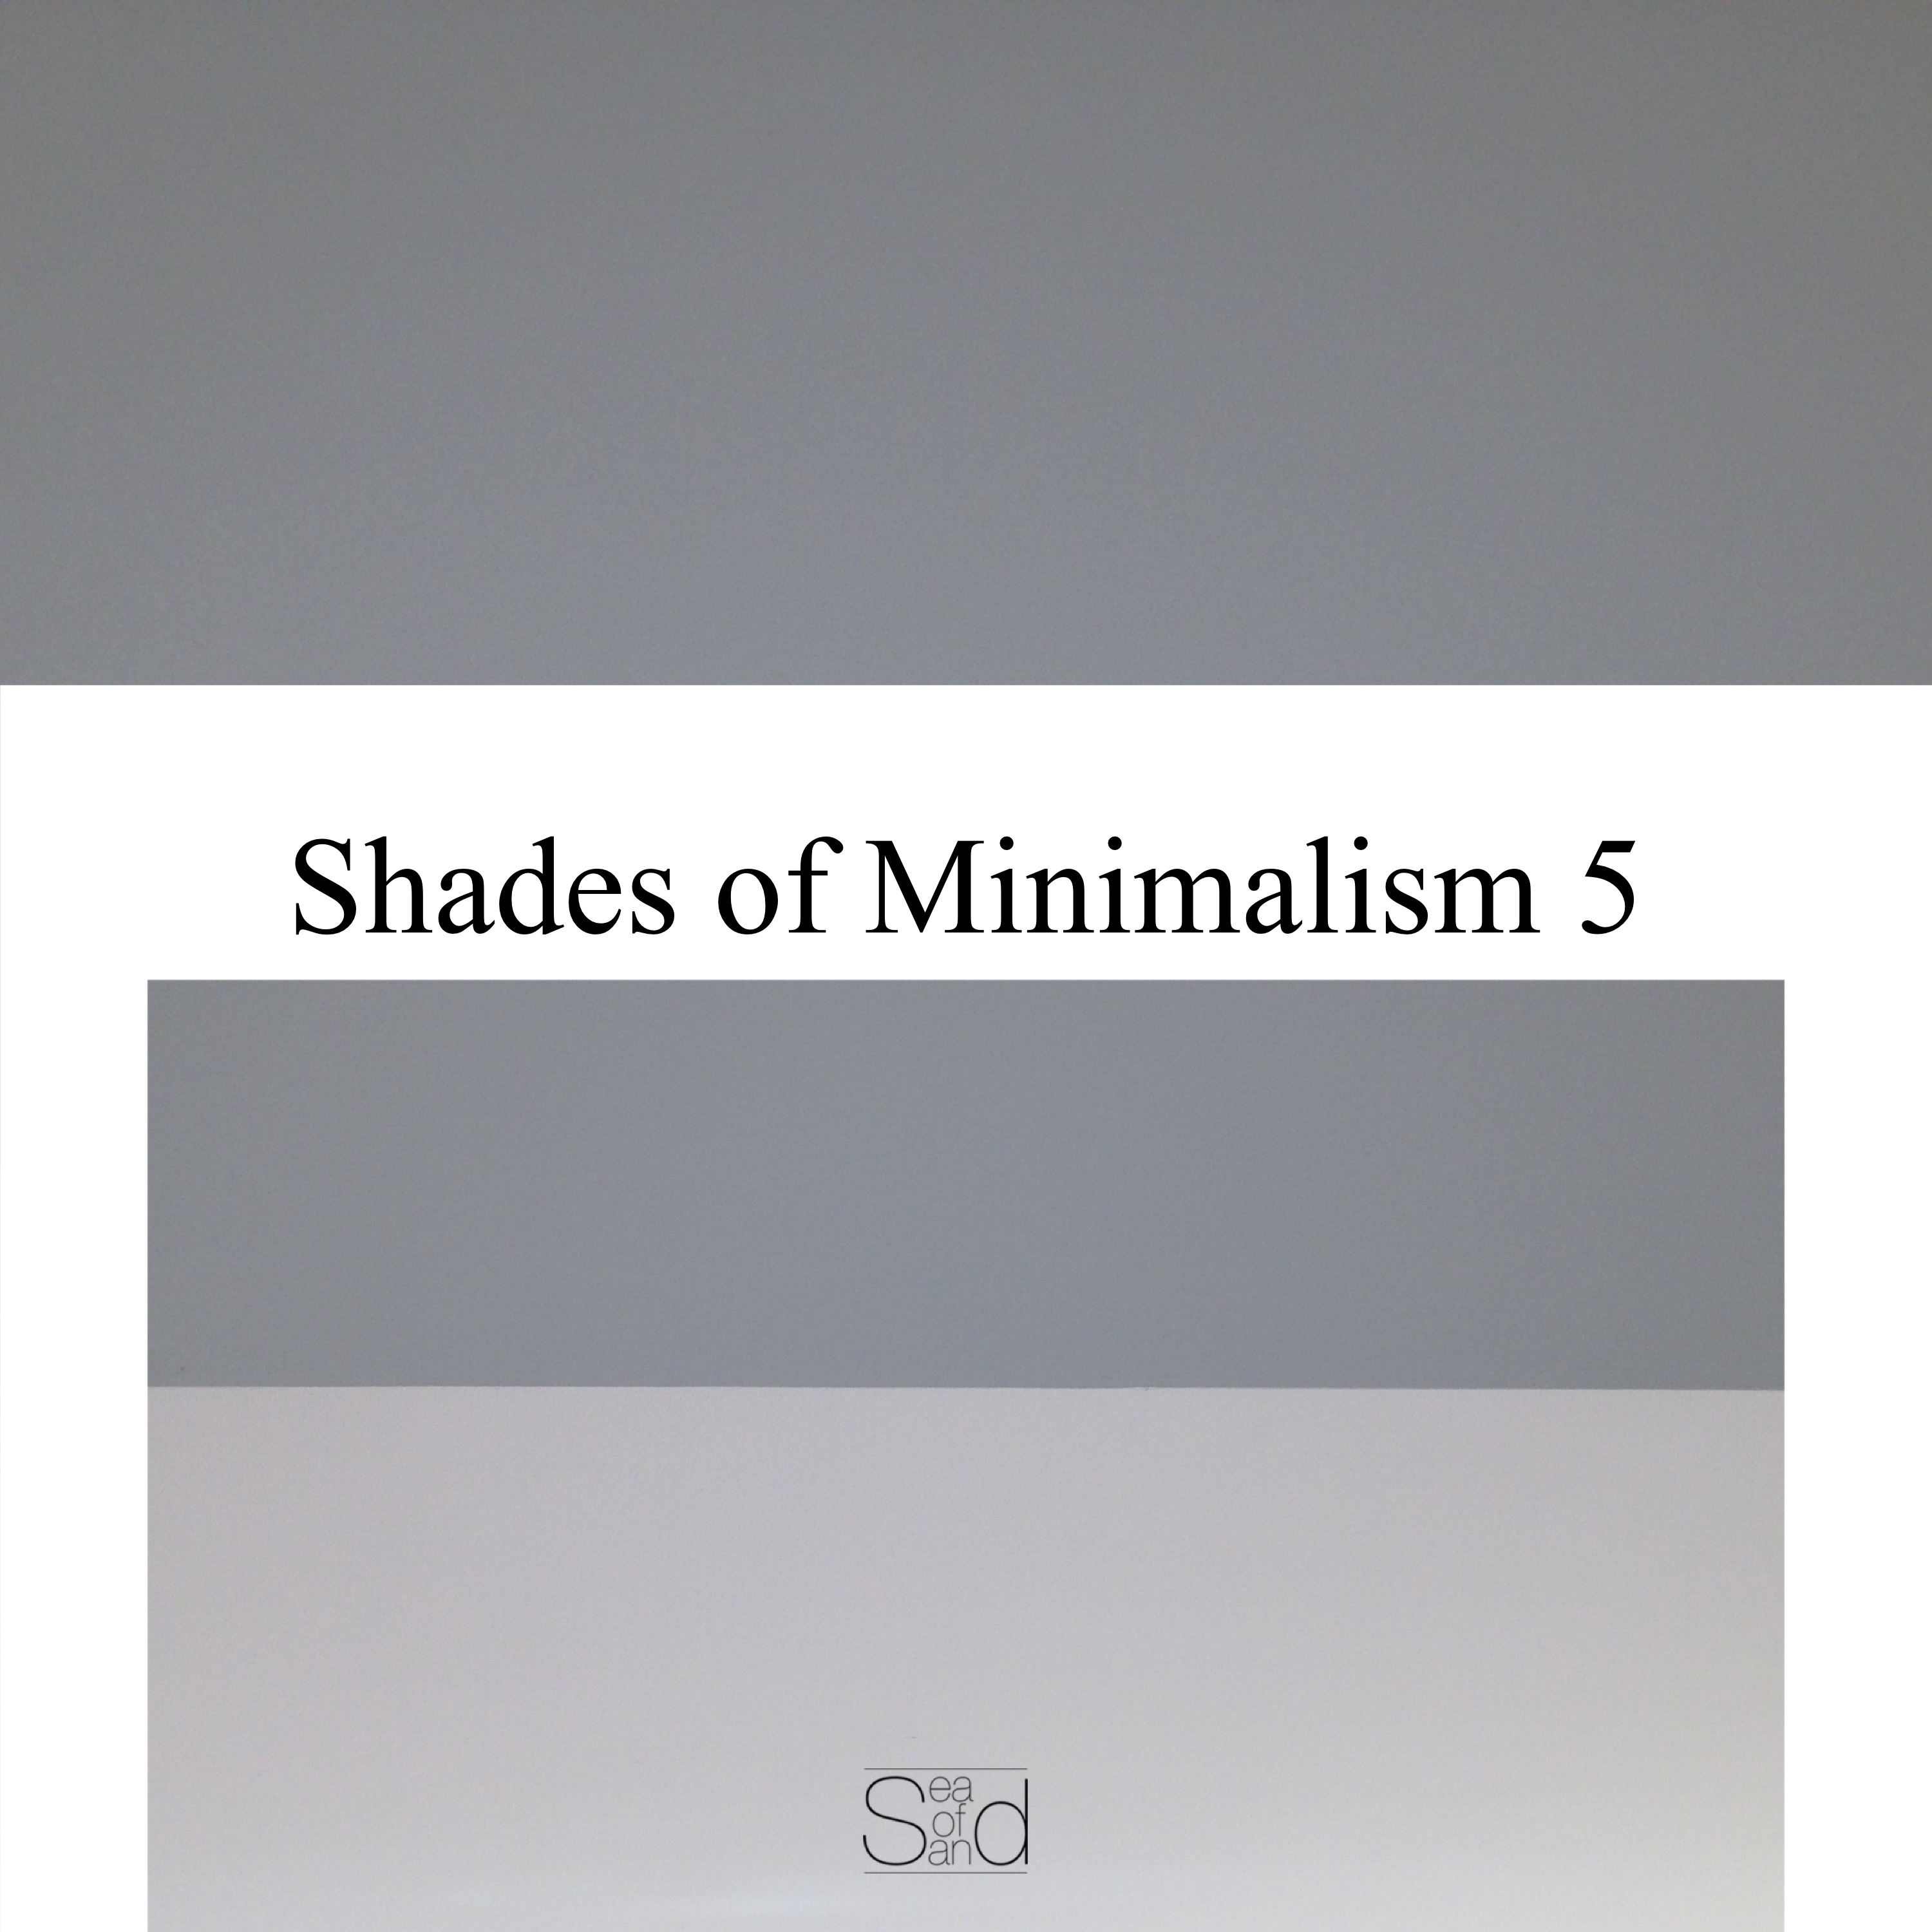 Shades of Minimalism 5